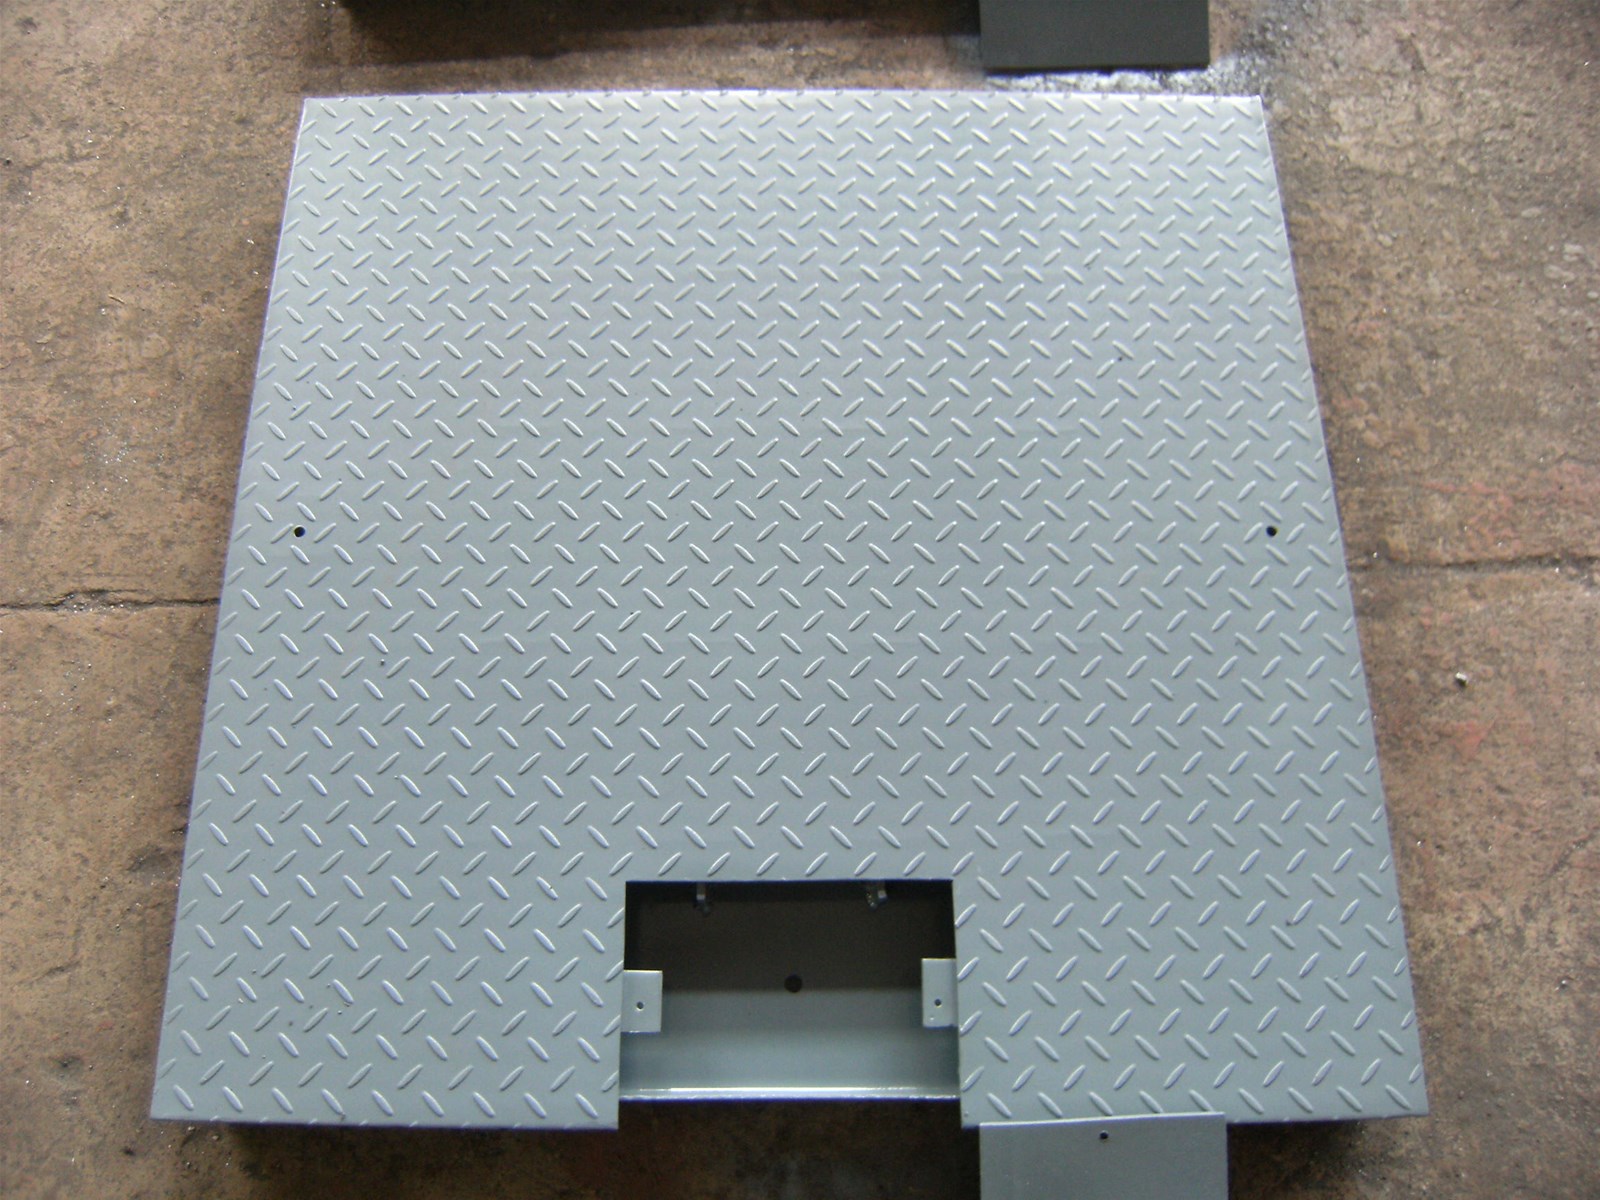 Steel Floor Scale 1t, 2t, 3t, 5t with Size 1X1m, 1.2X1.2m, 1.2X1.5m, 2X2m